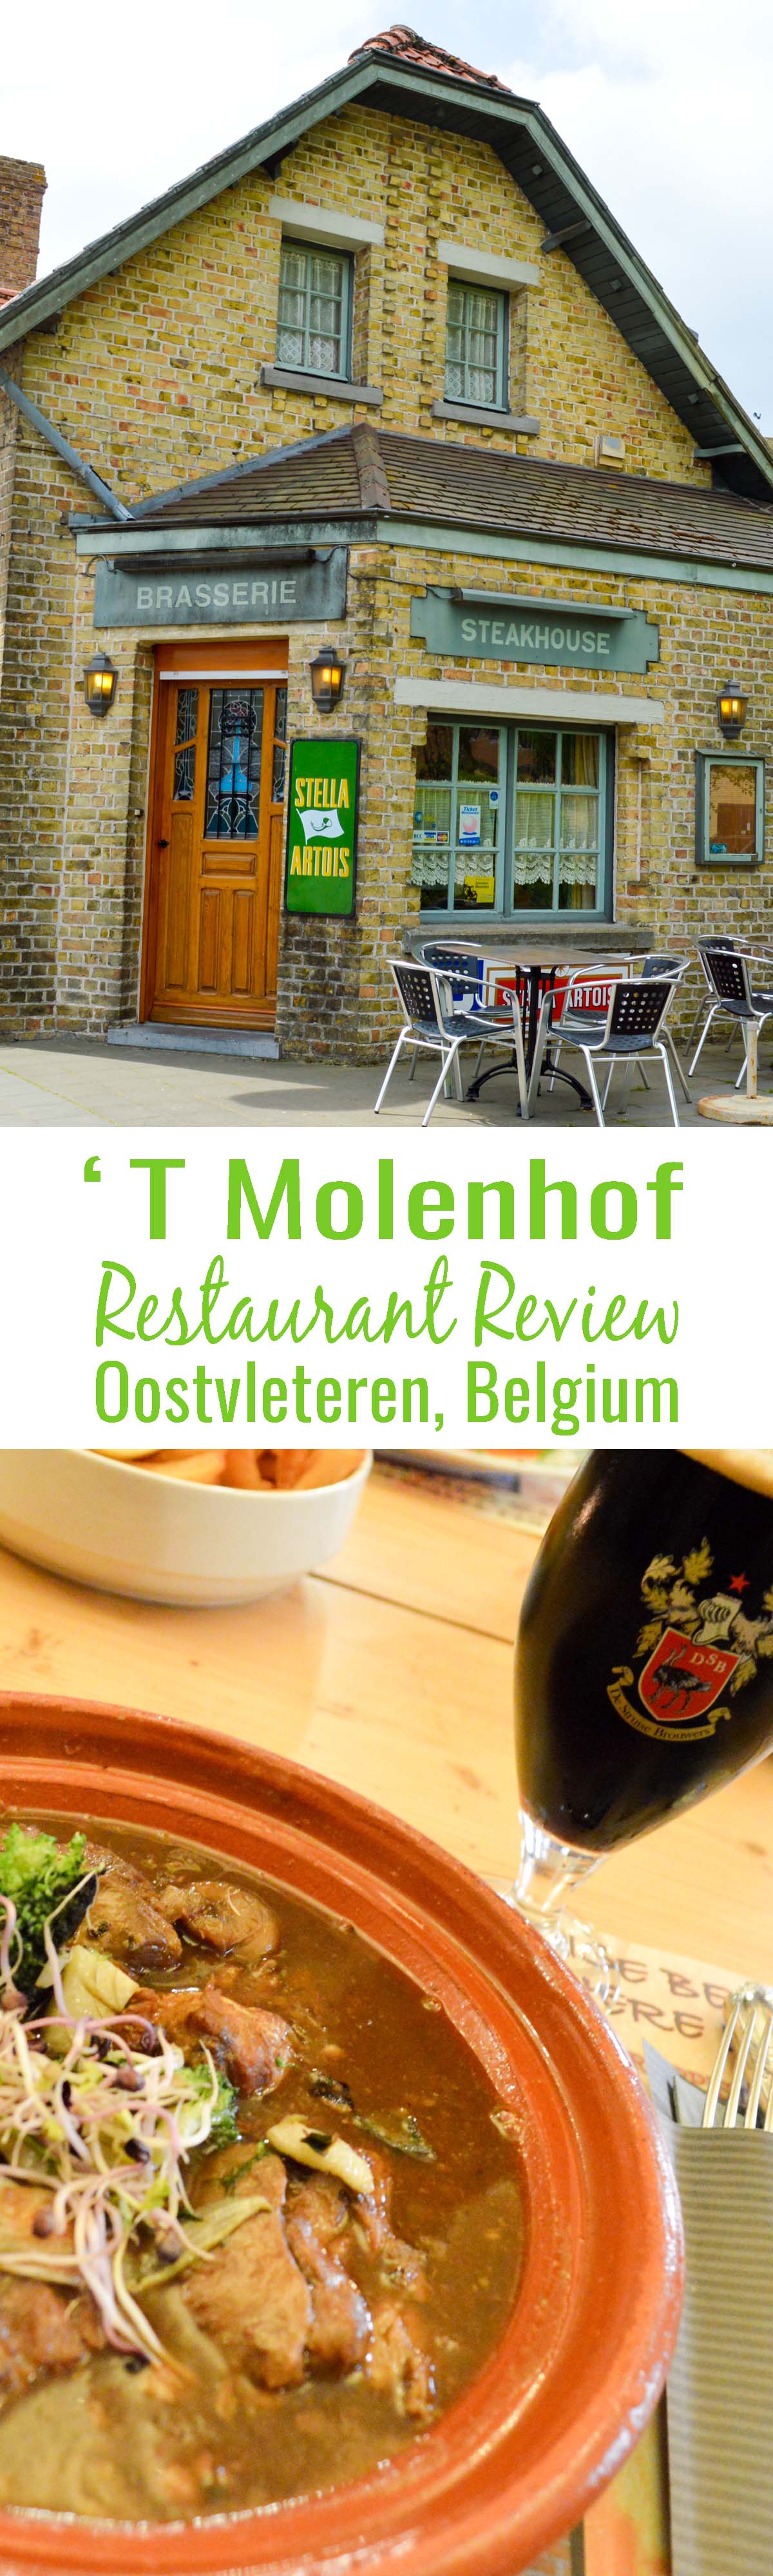 A restaurant review of ‘T Molenhof in Oostvleteren, Belgium. One of the best restaurants I’ve eaten at in the world for both food and beer!